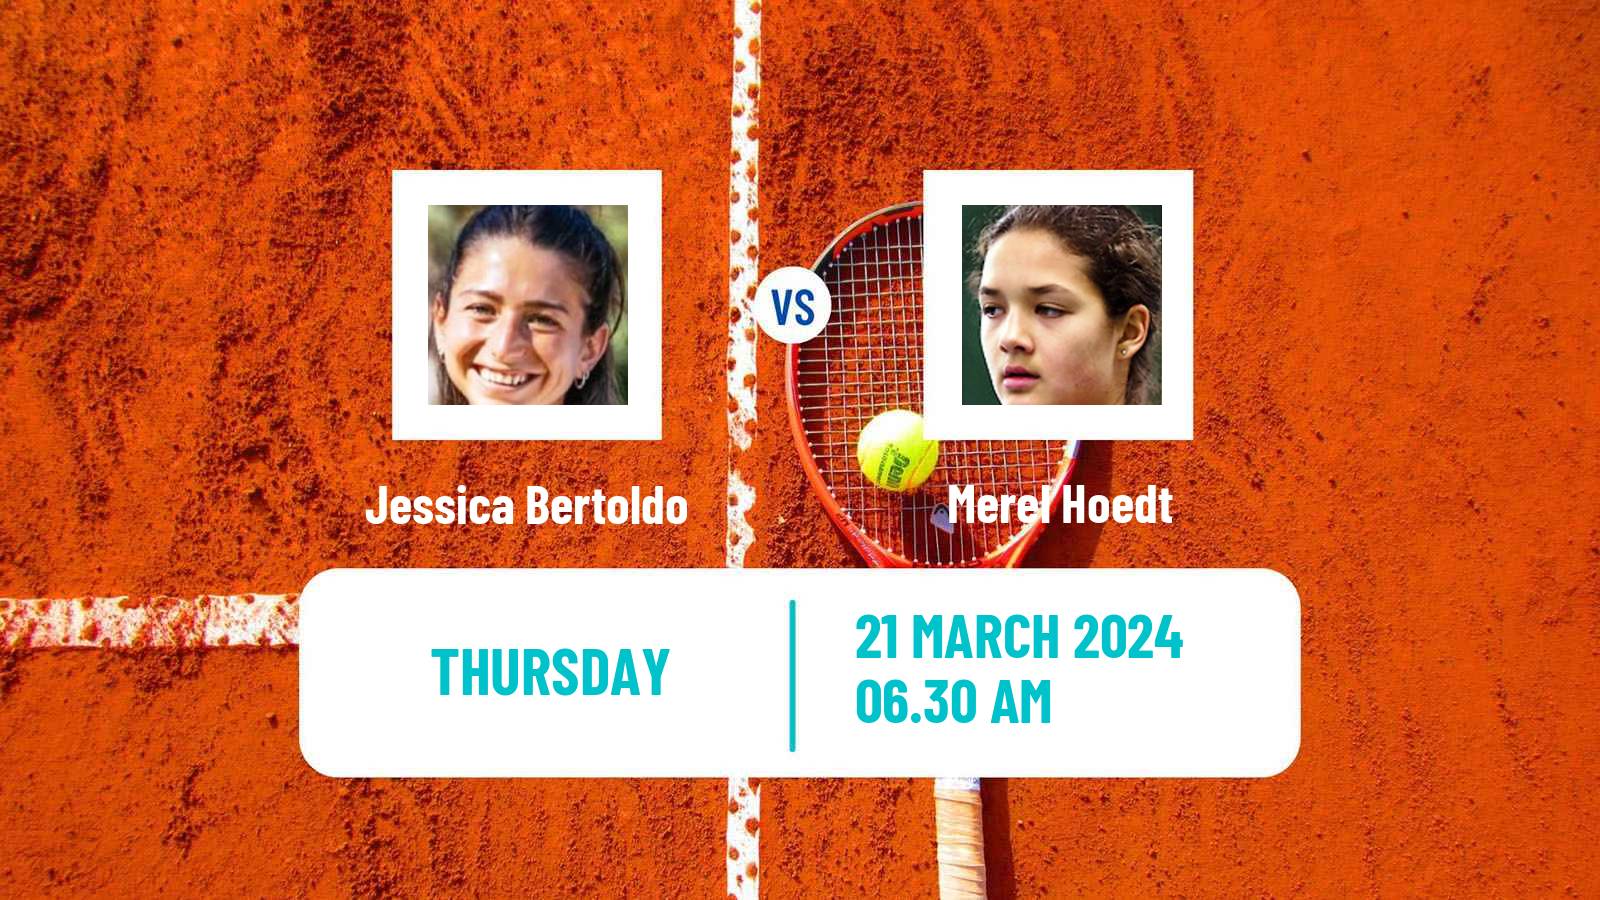 Tennis ITF W15 Le Havre Women Jessica Bertoldo - Merel Hoedt